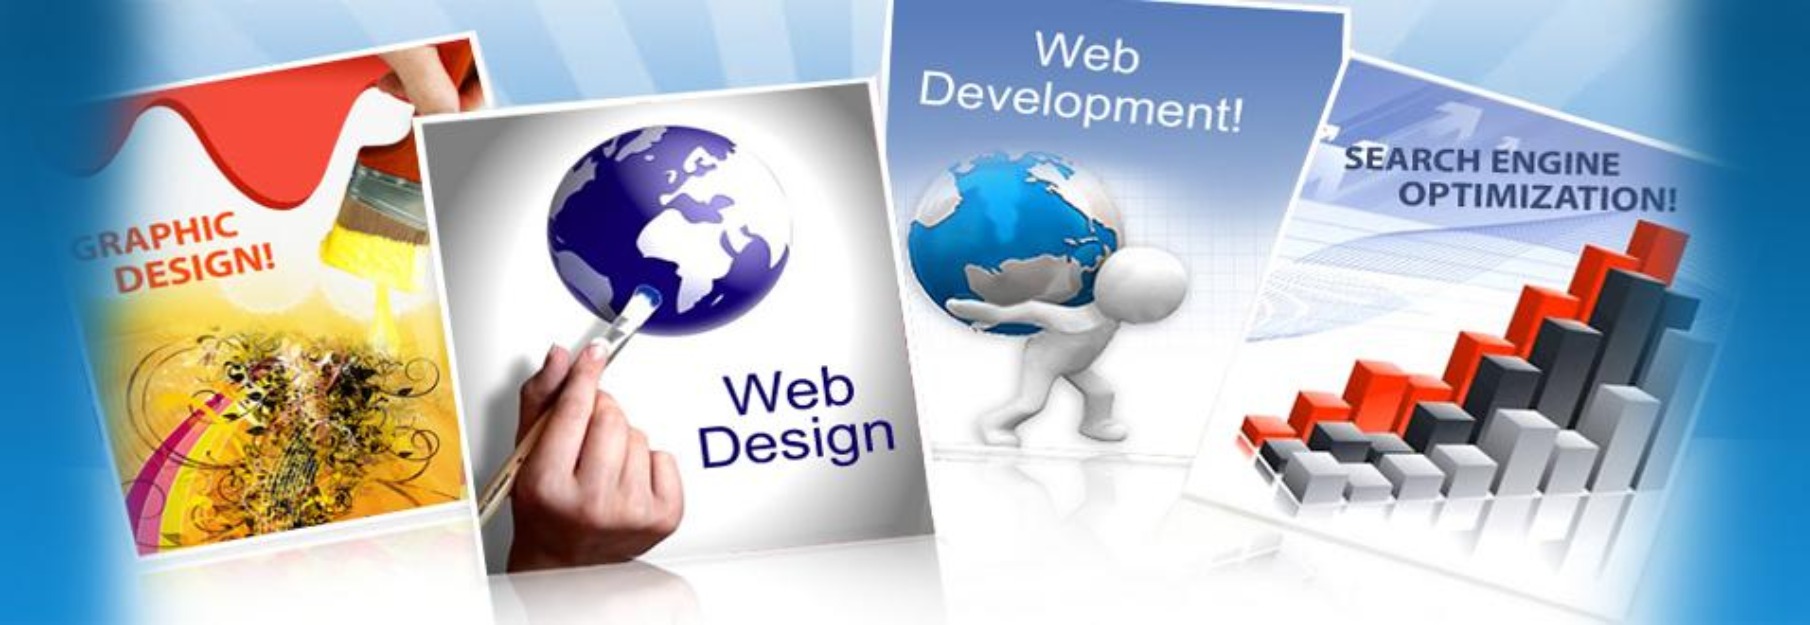 Ecommerce Lanzarote - Web Design Lanzarote - Professional Web Site Development Lanzarote